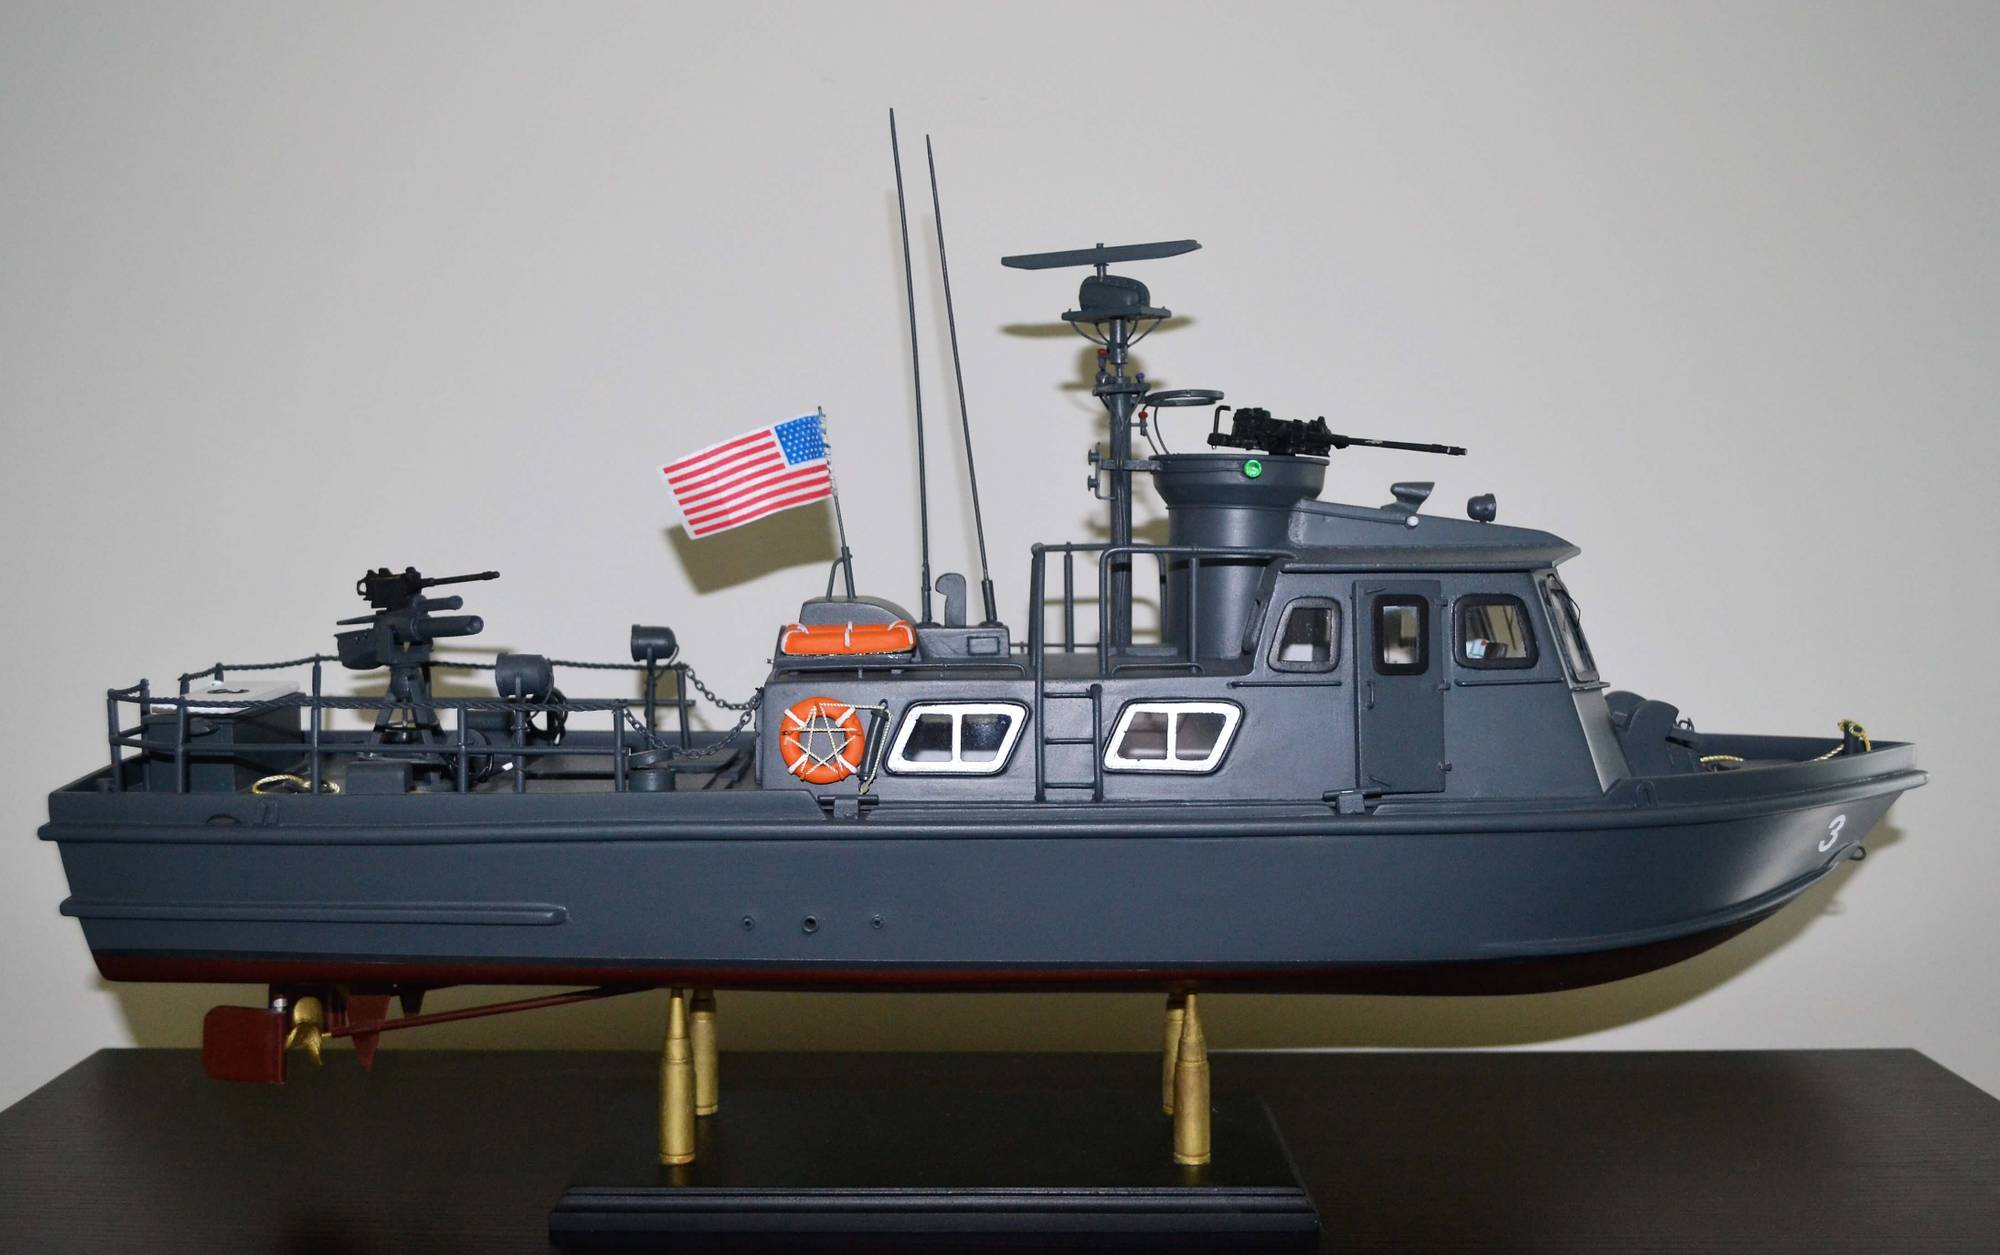 A model replica of a swift boat, American flag waving.